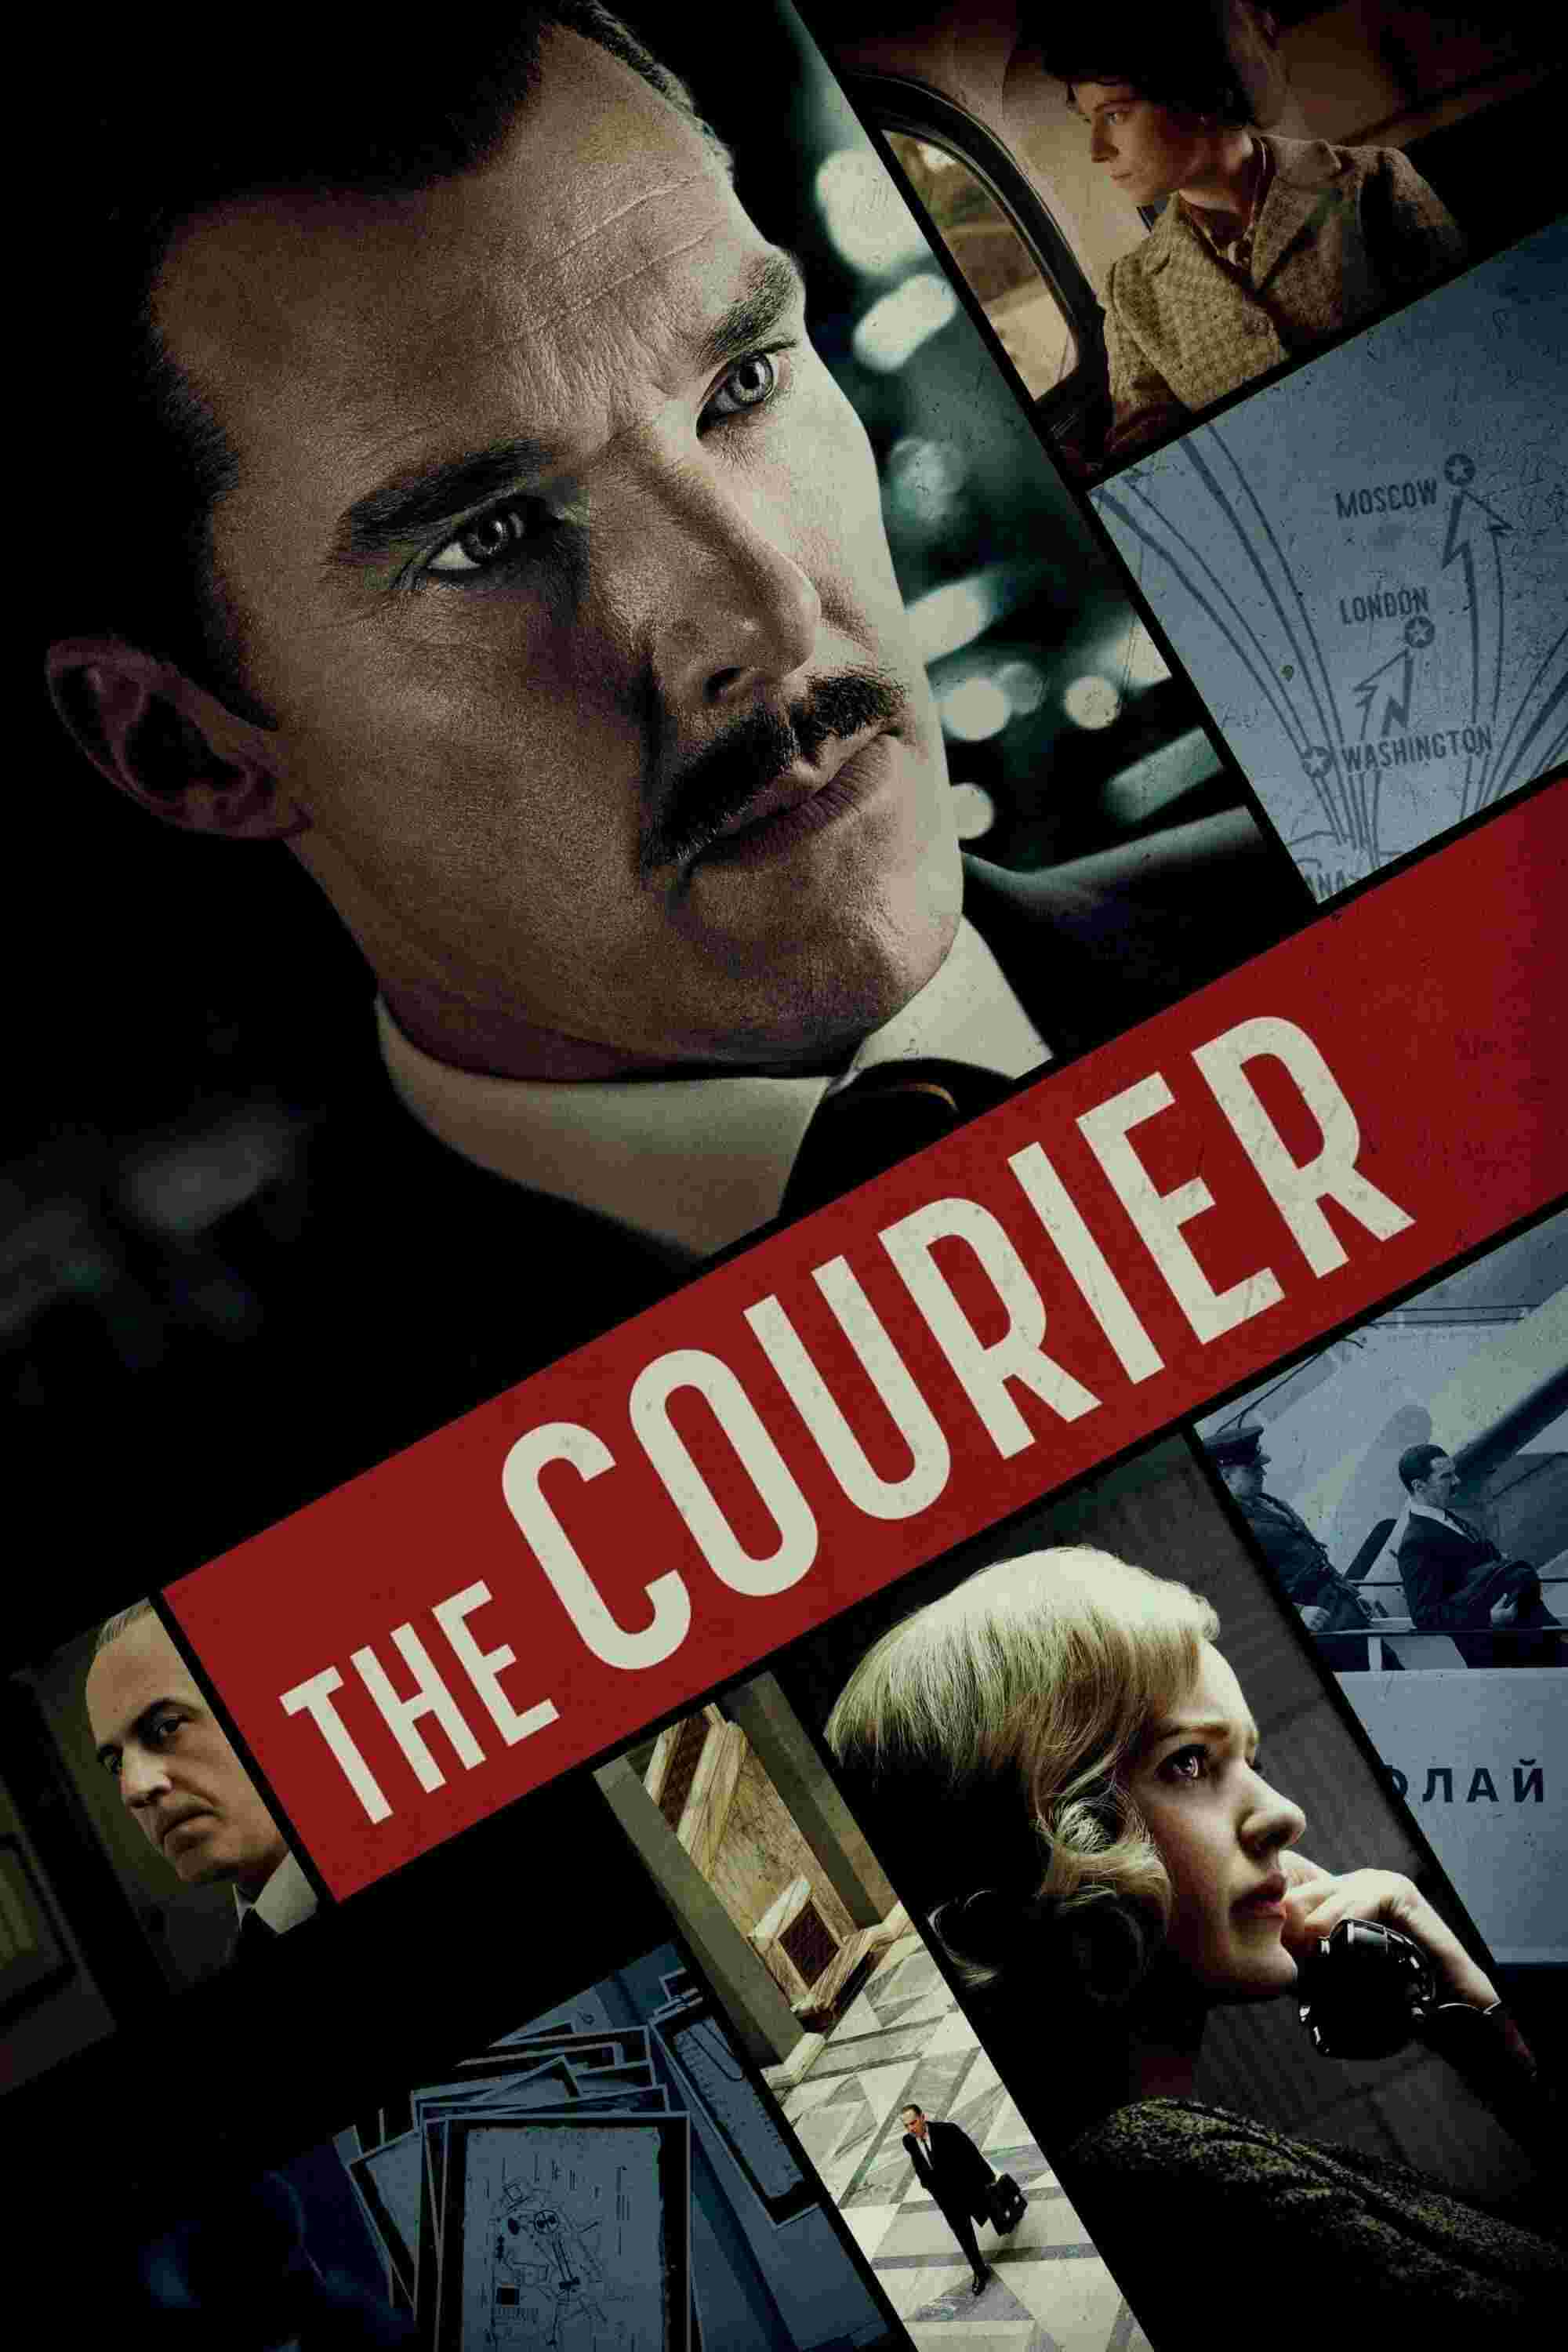 The Courier (2020) Benedict Cumberbatch